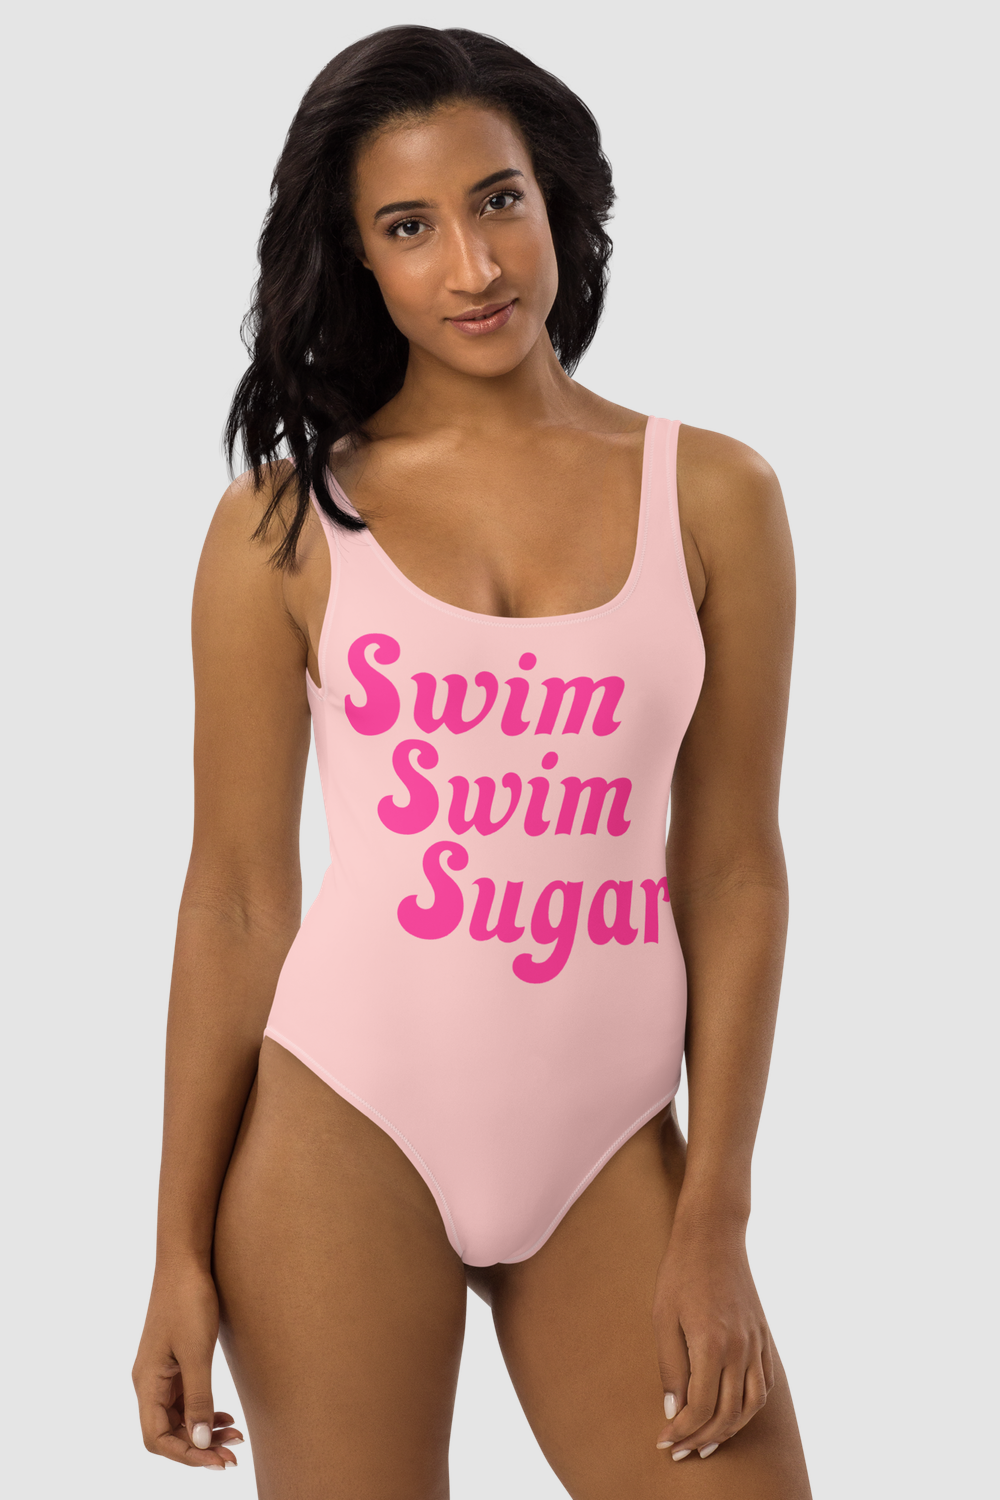 Swim Swim Sugar Cosmo Pink Women's One-Piece Swimsuit